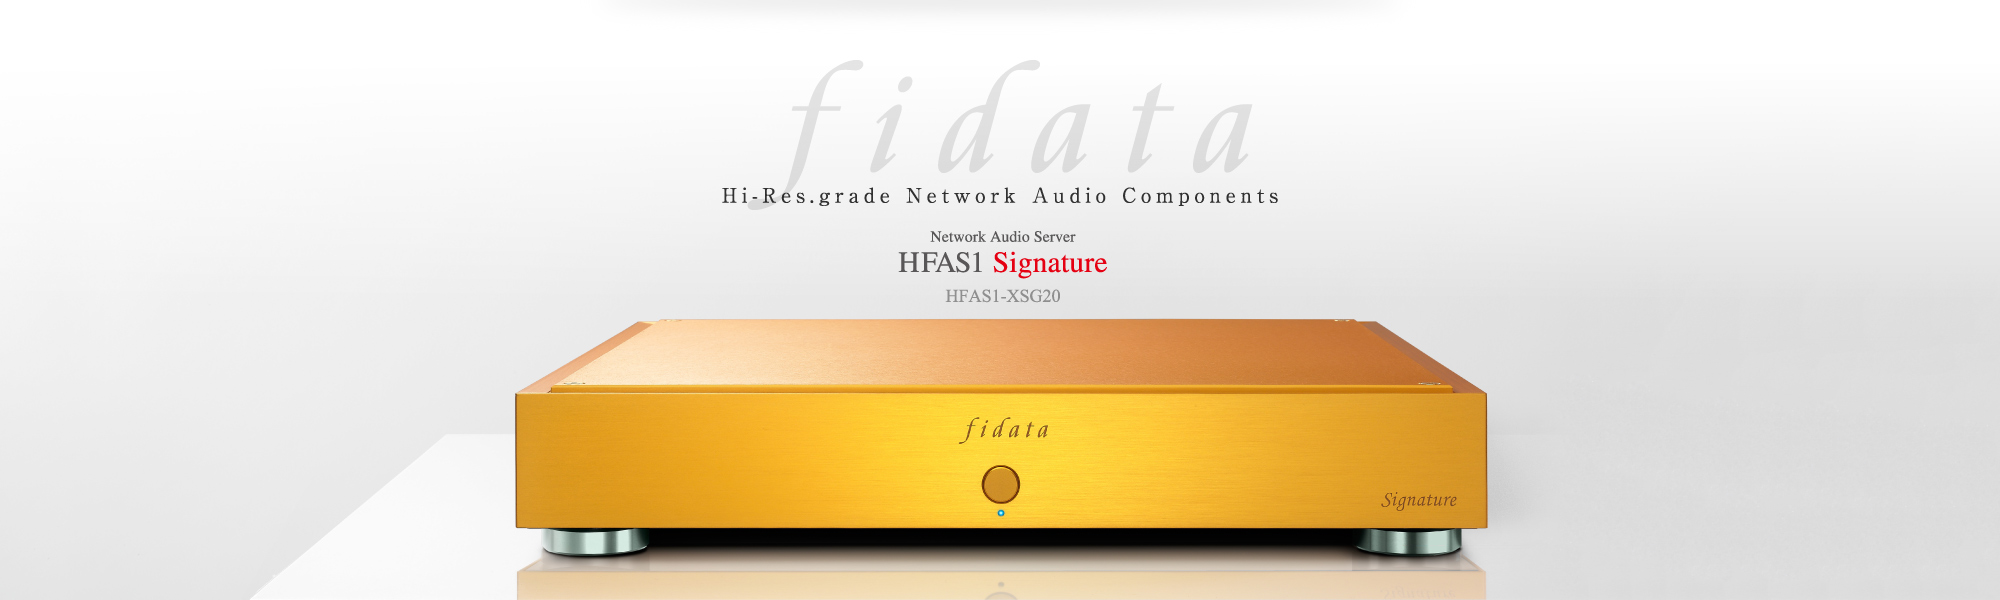 Hi-Res.grade Network Audio Components｜HFAS1 Signature HFAS1-XSG20